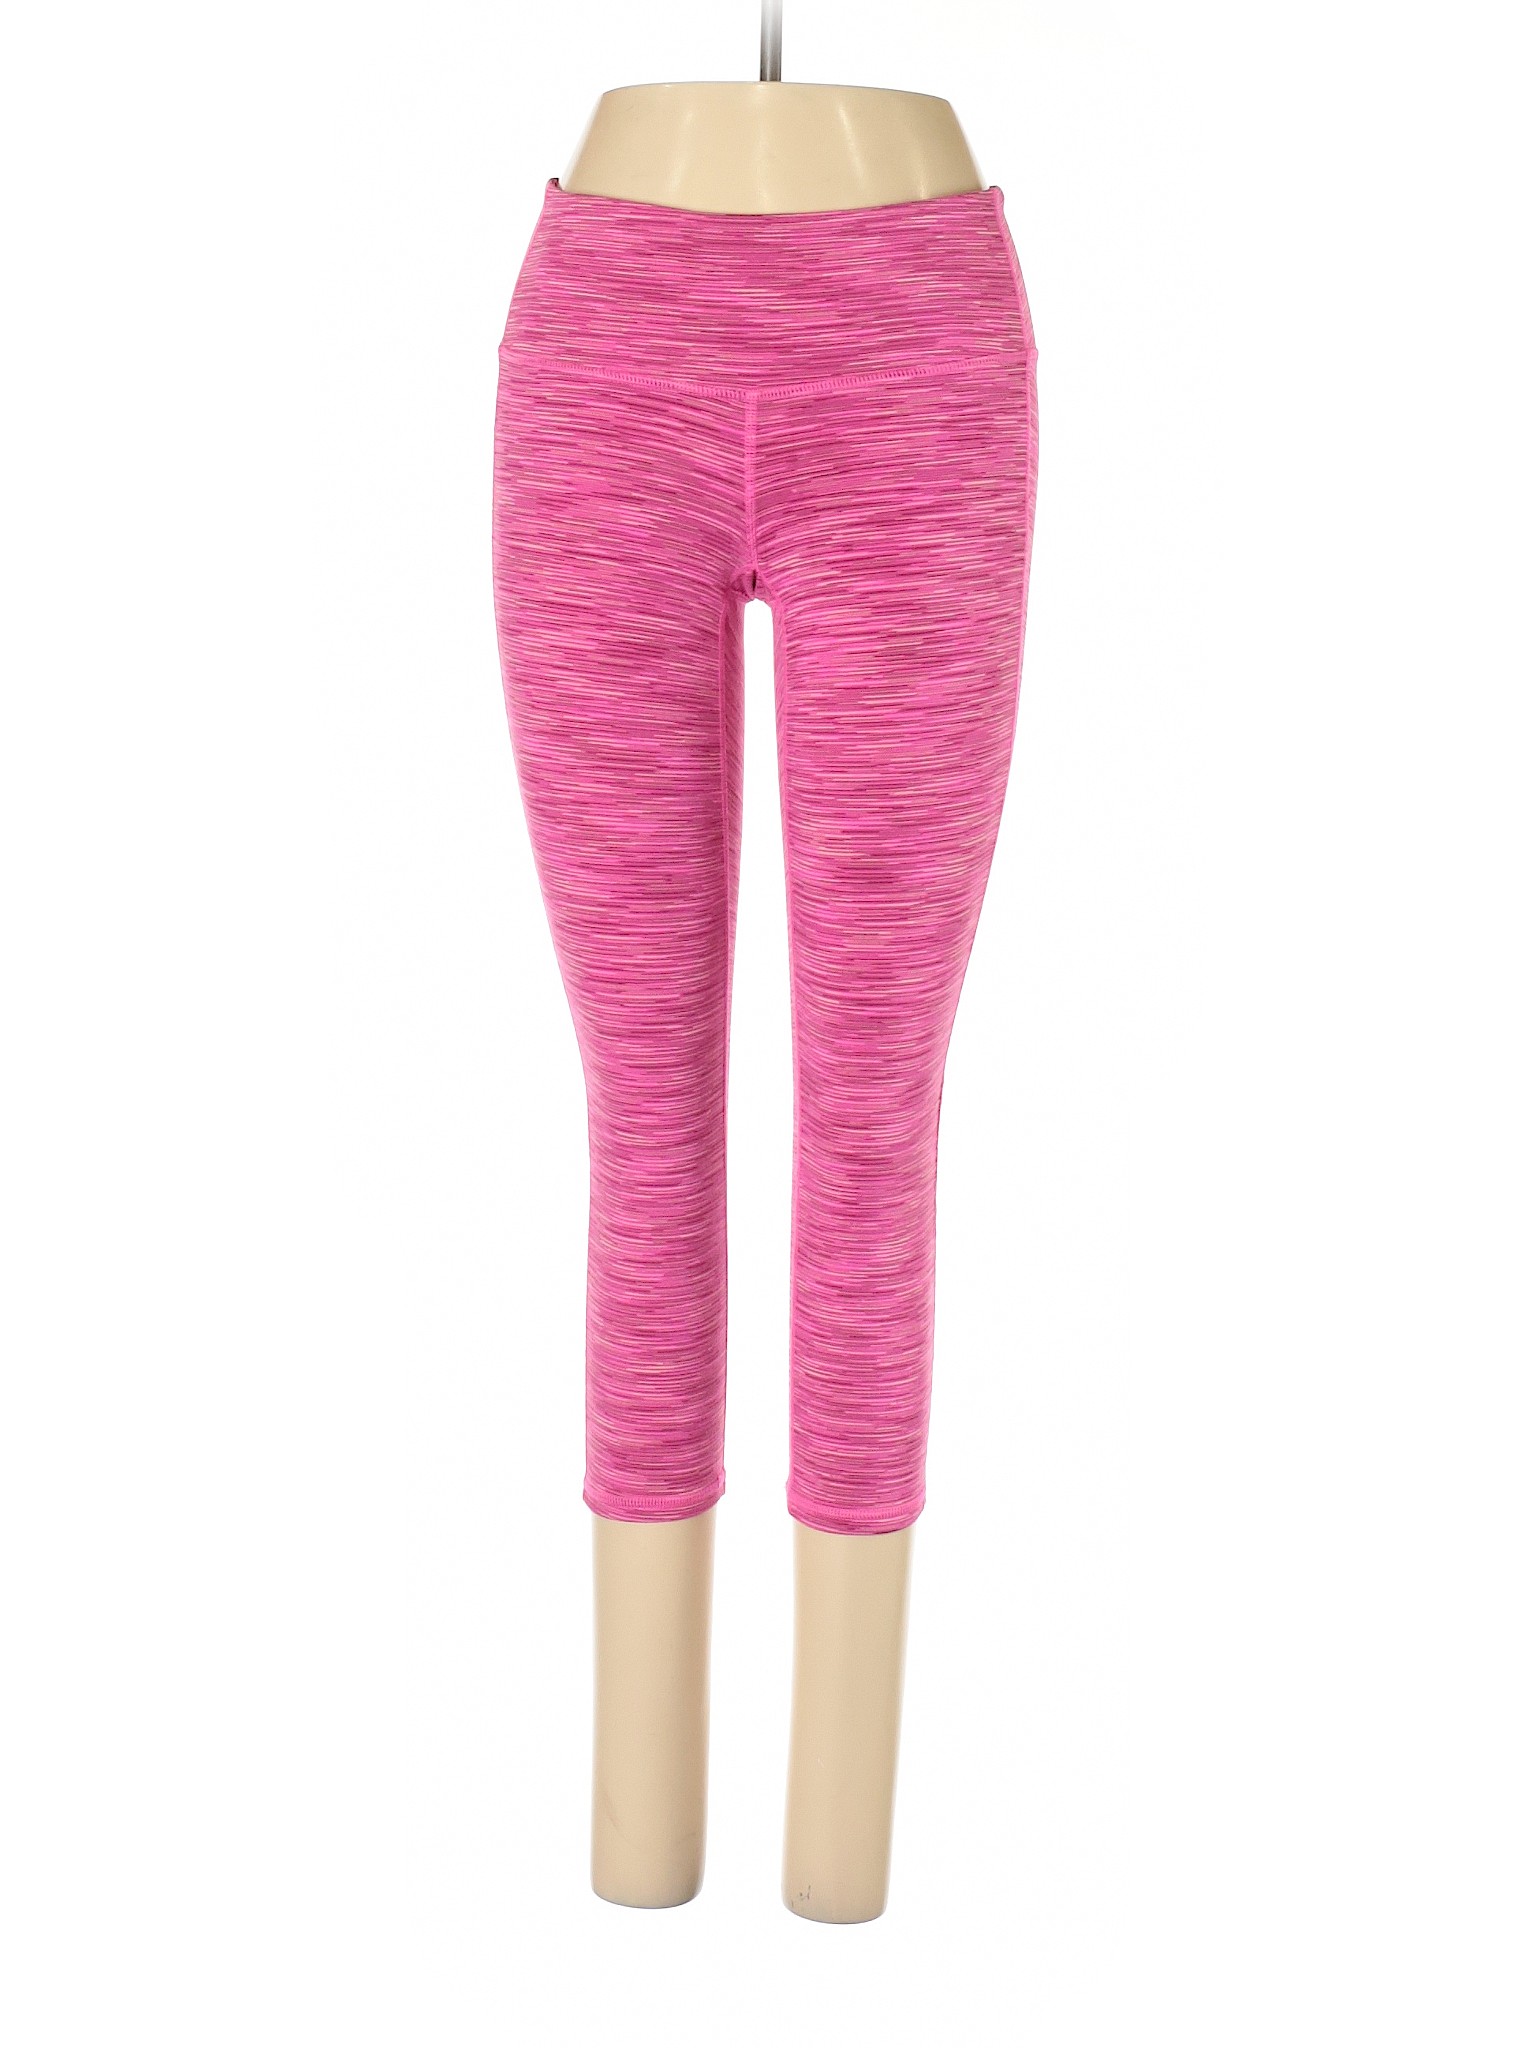 Athleta Women Pink Active Pants XS | eBay